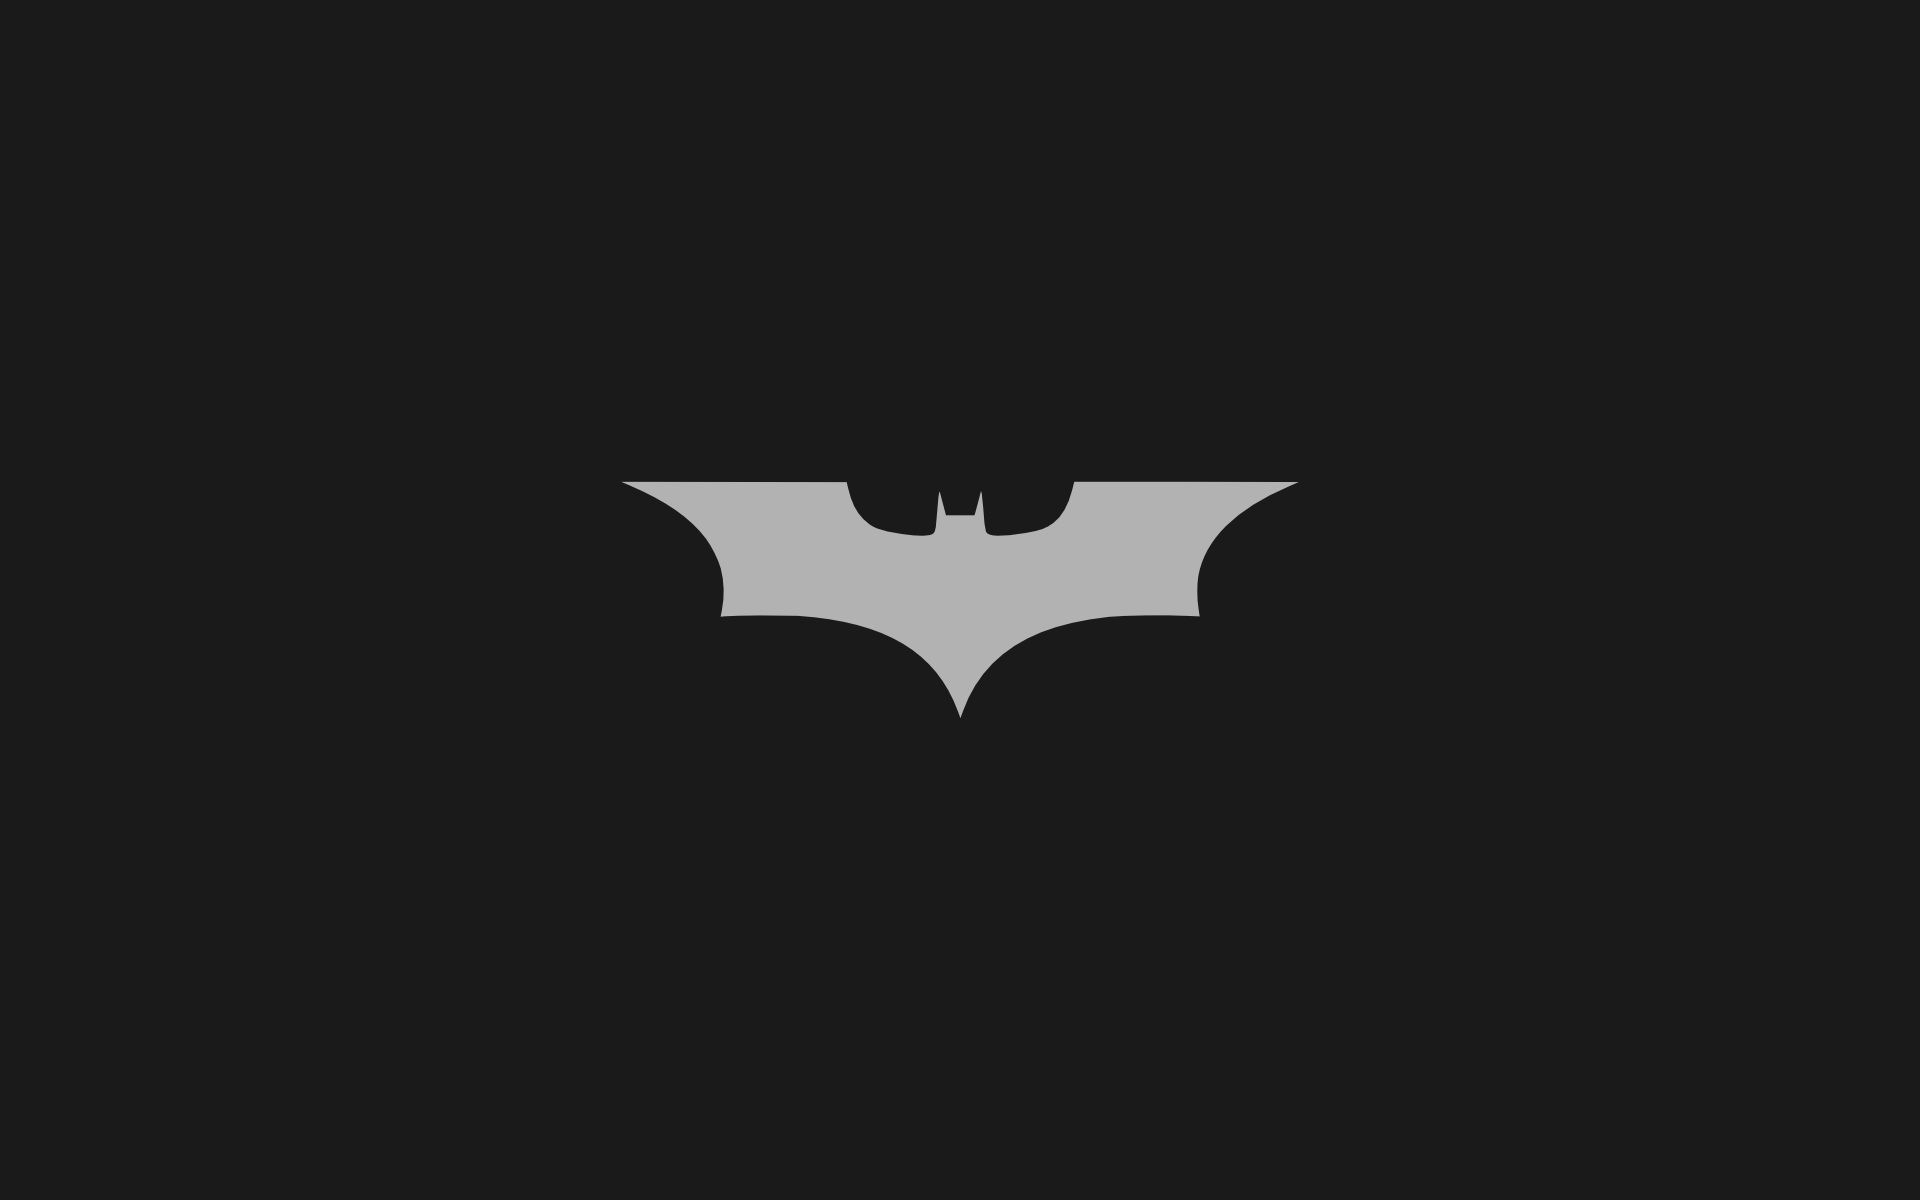 Скачать обои бесплатно Комиксы, Минималистский, Бэтмен, Логотип Бэтмена, Комиксы Dc картинка на рабочий стол ПК